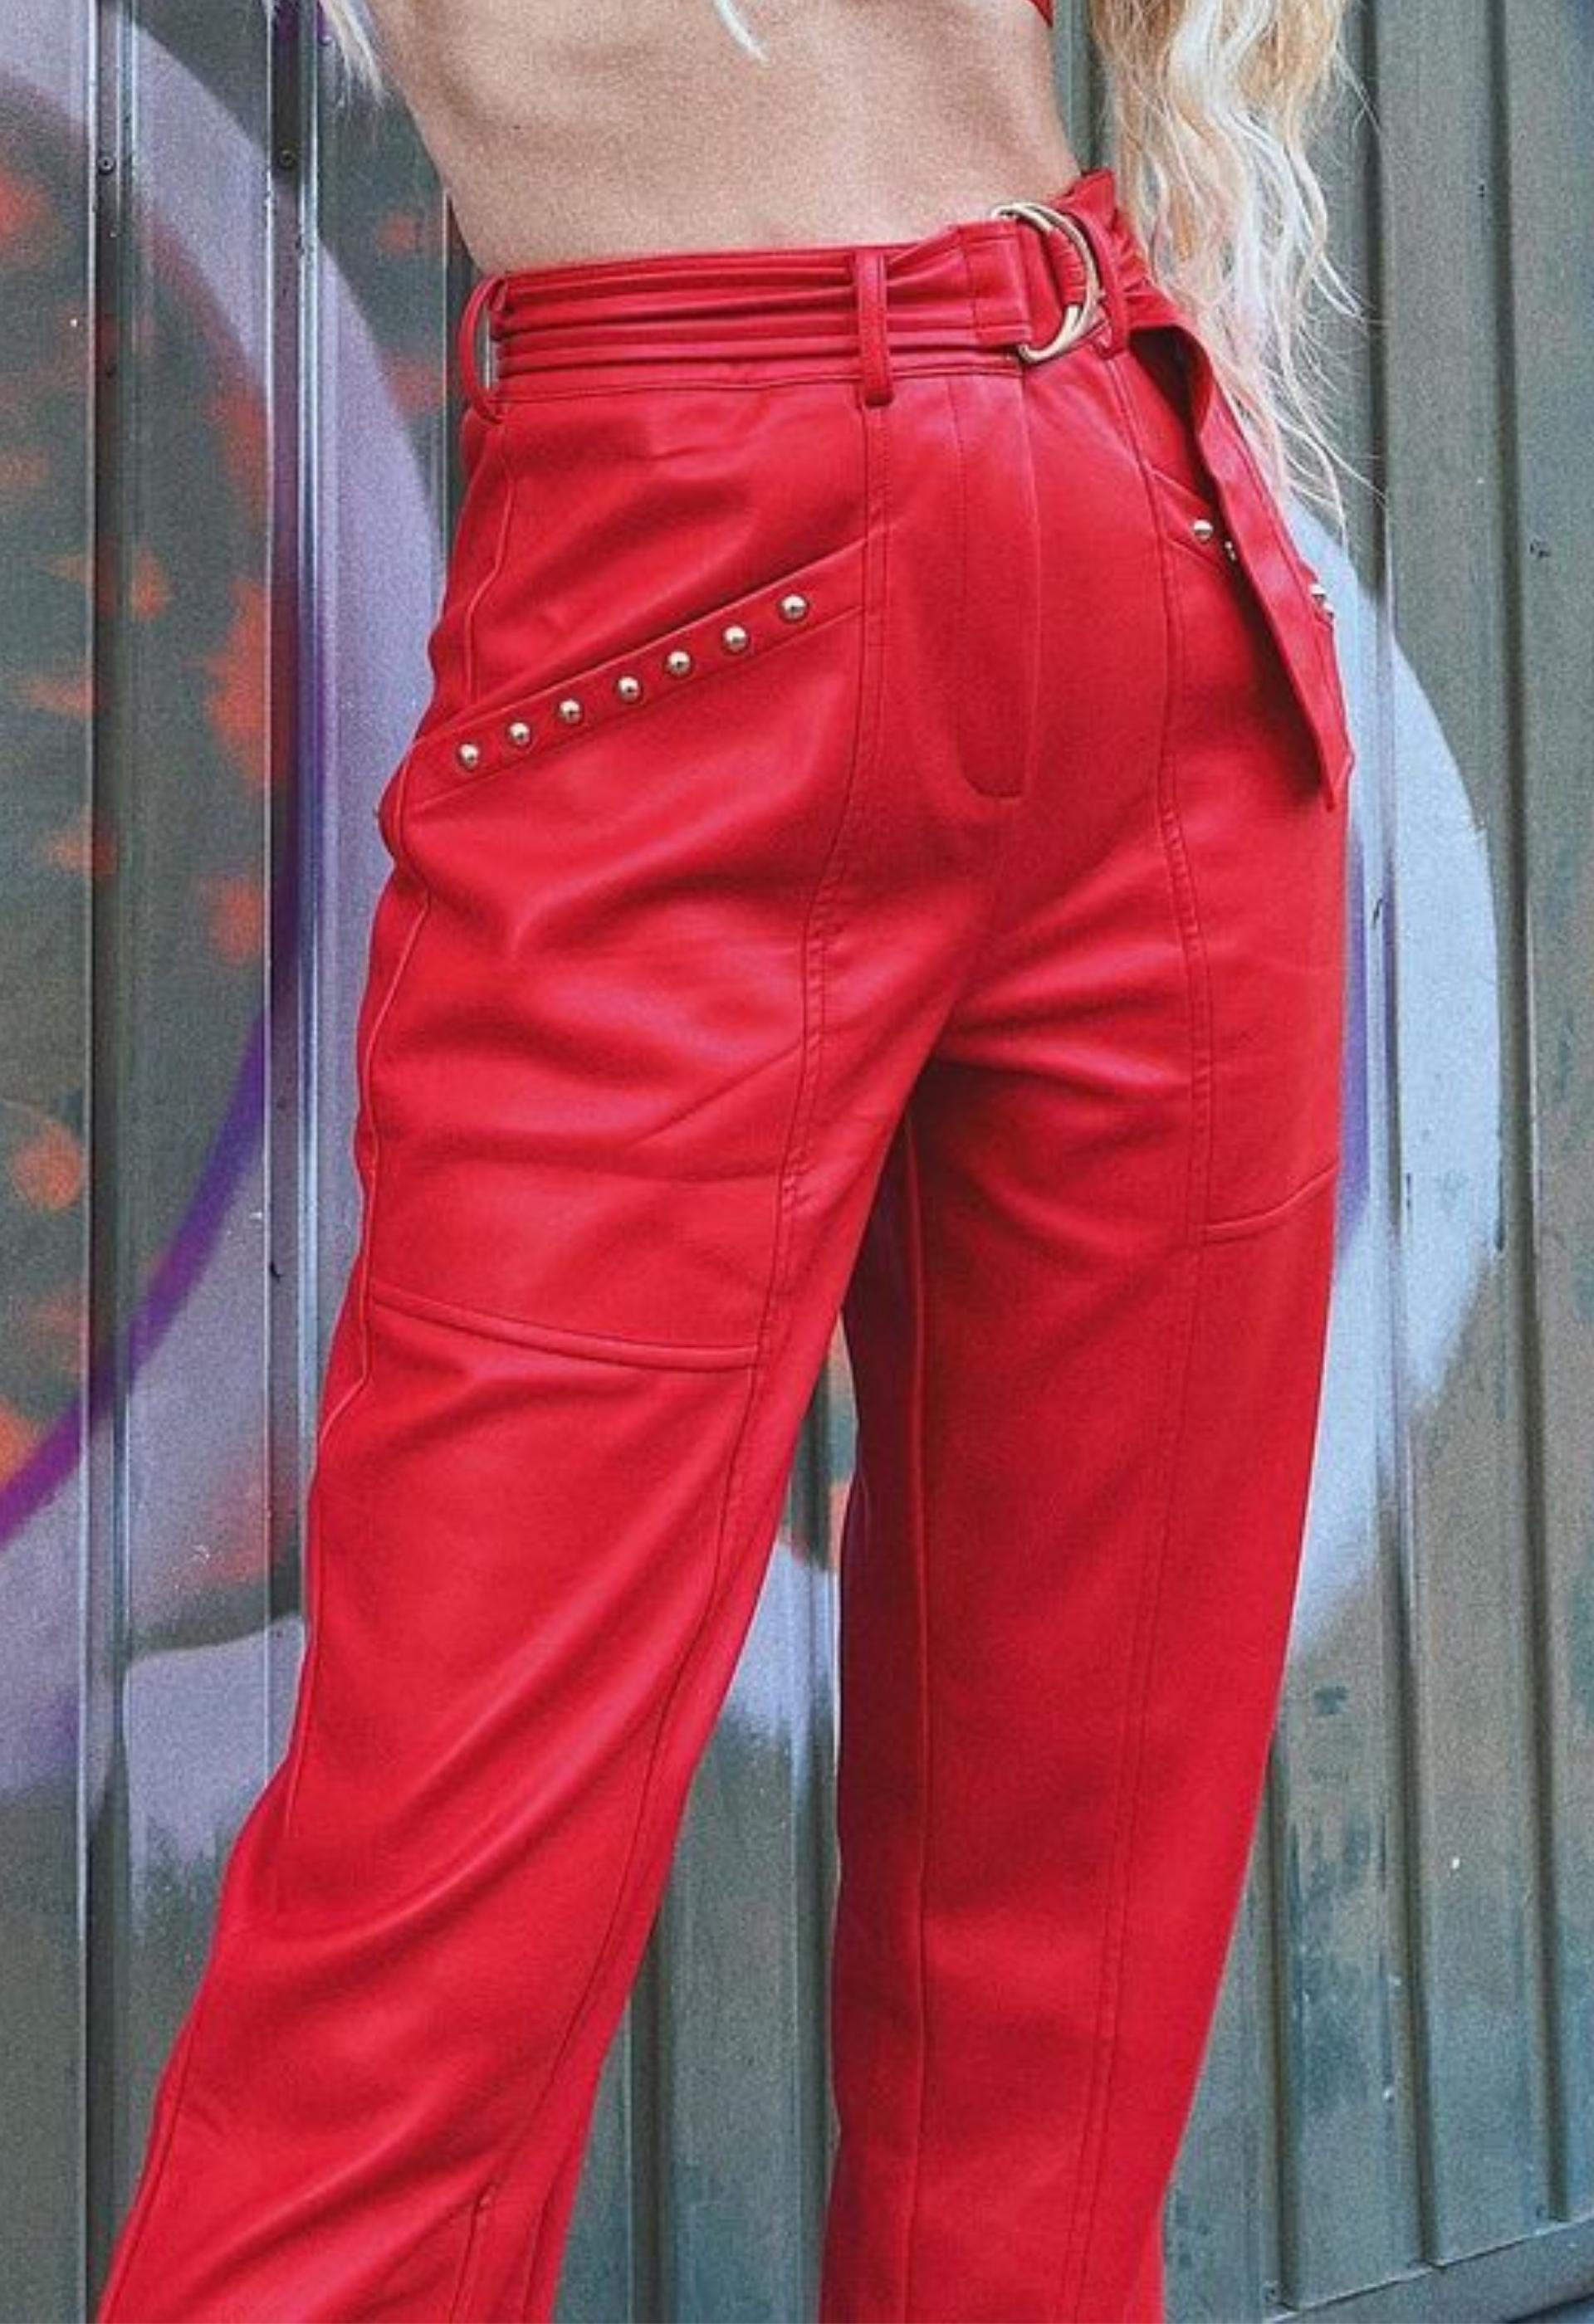 pantalón rojo